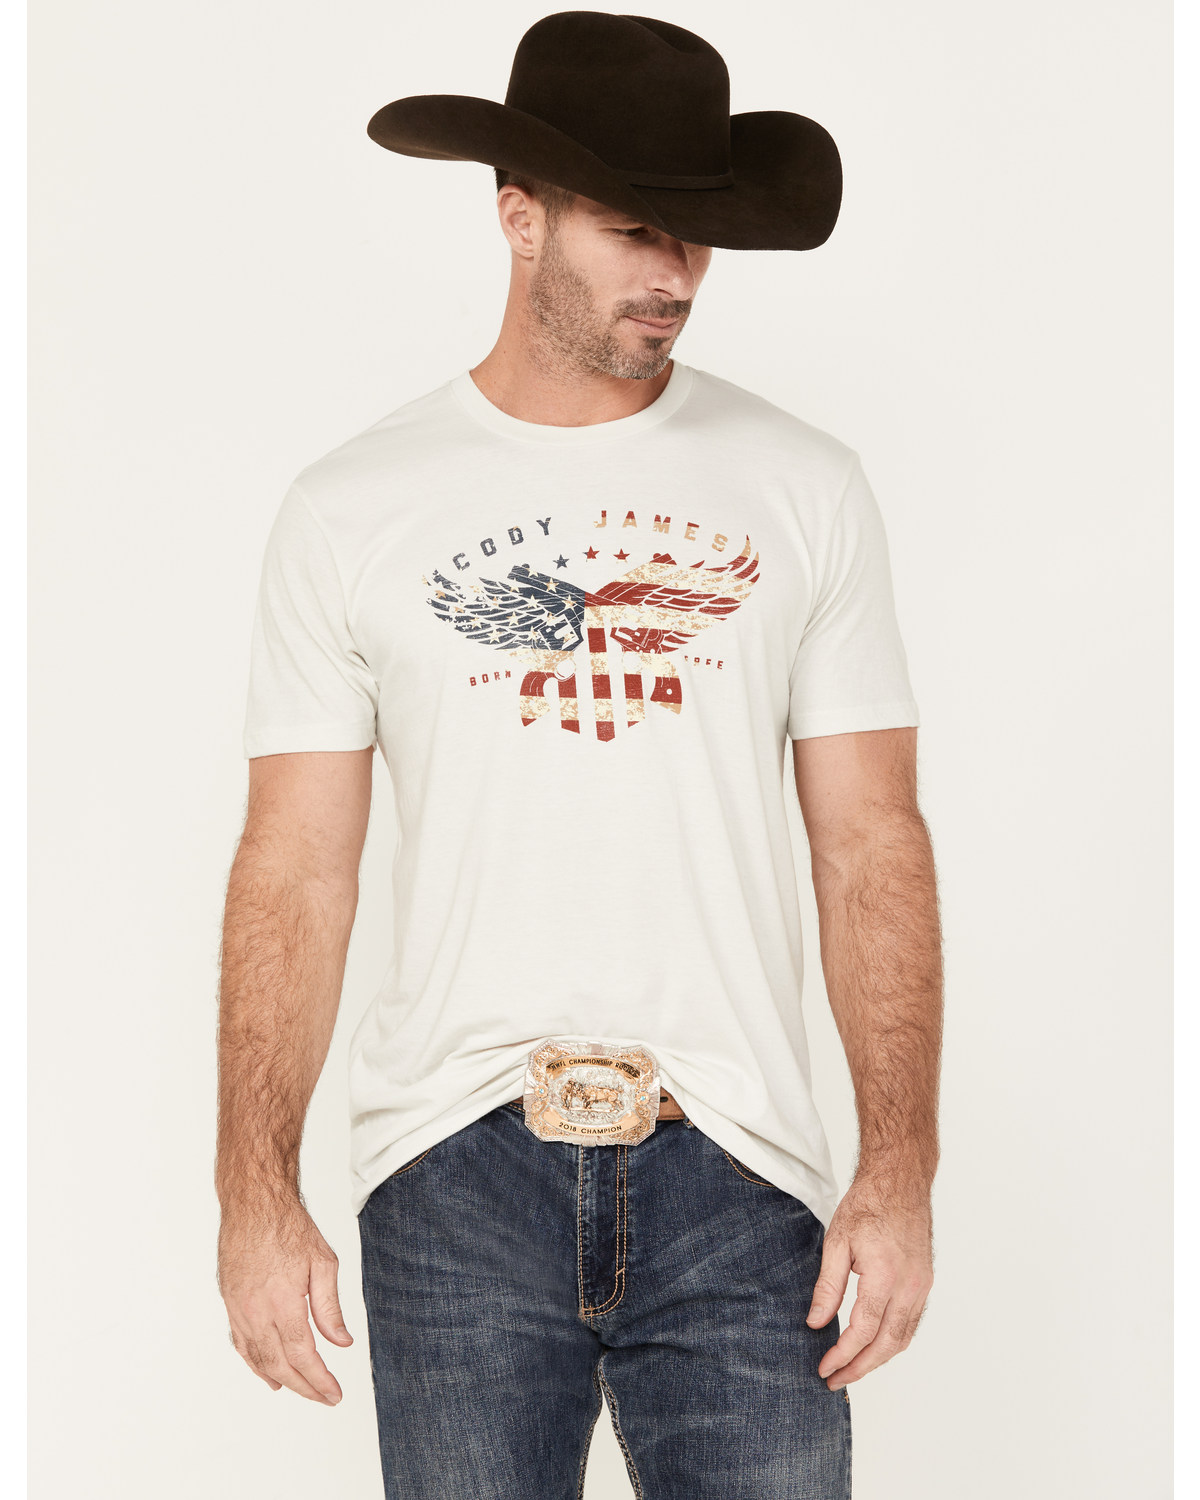 Cody James Men's Born Free Short Sleeve Graphic T-Shirt